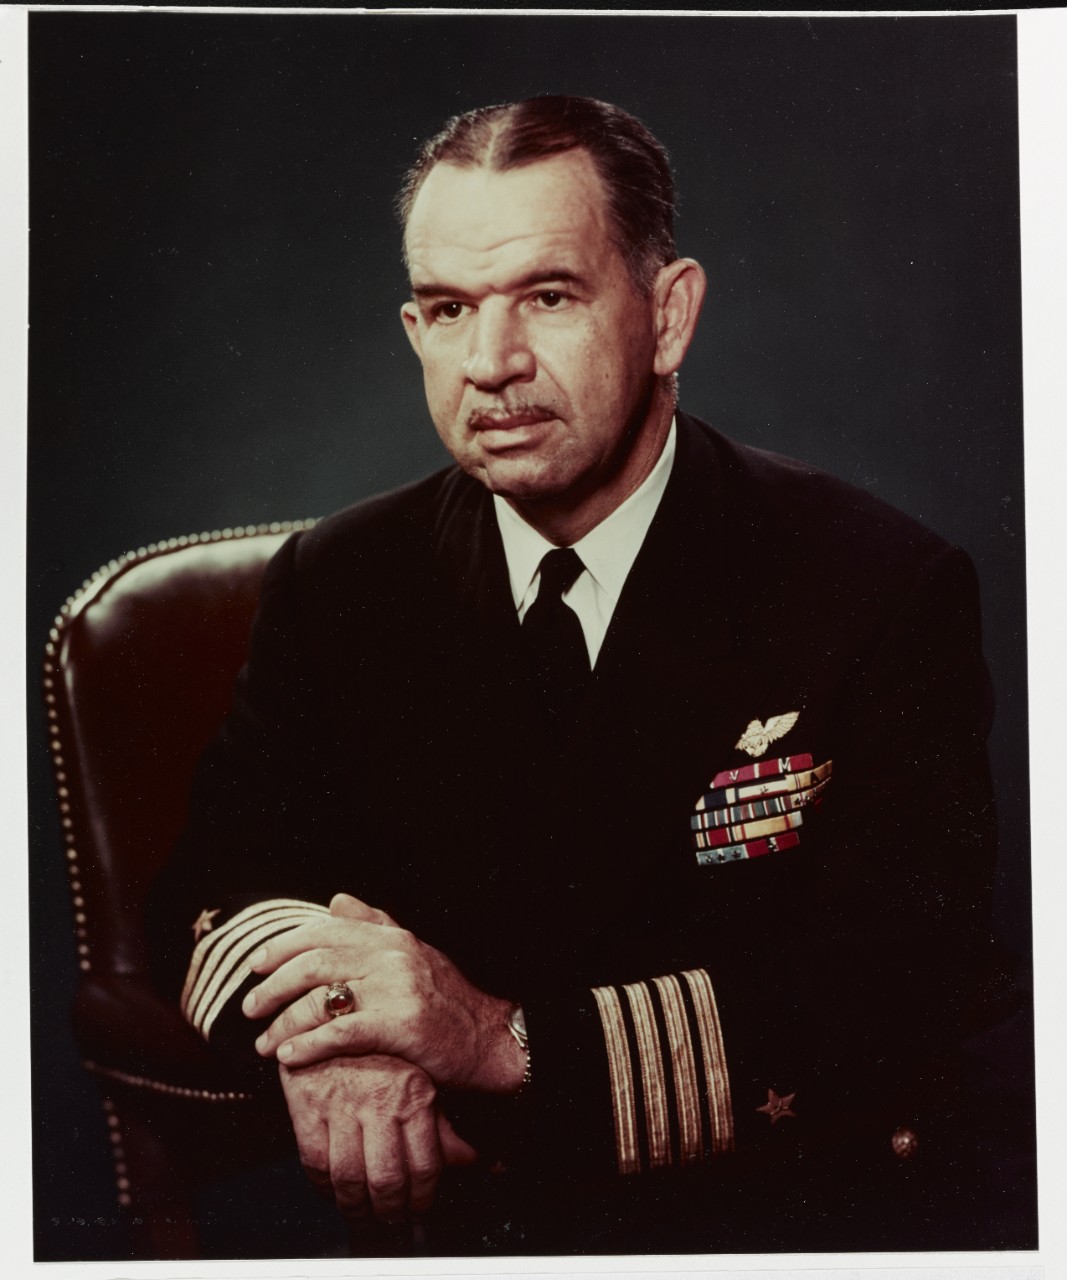 Capt. Cameron Briggs, USN.